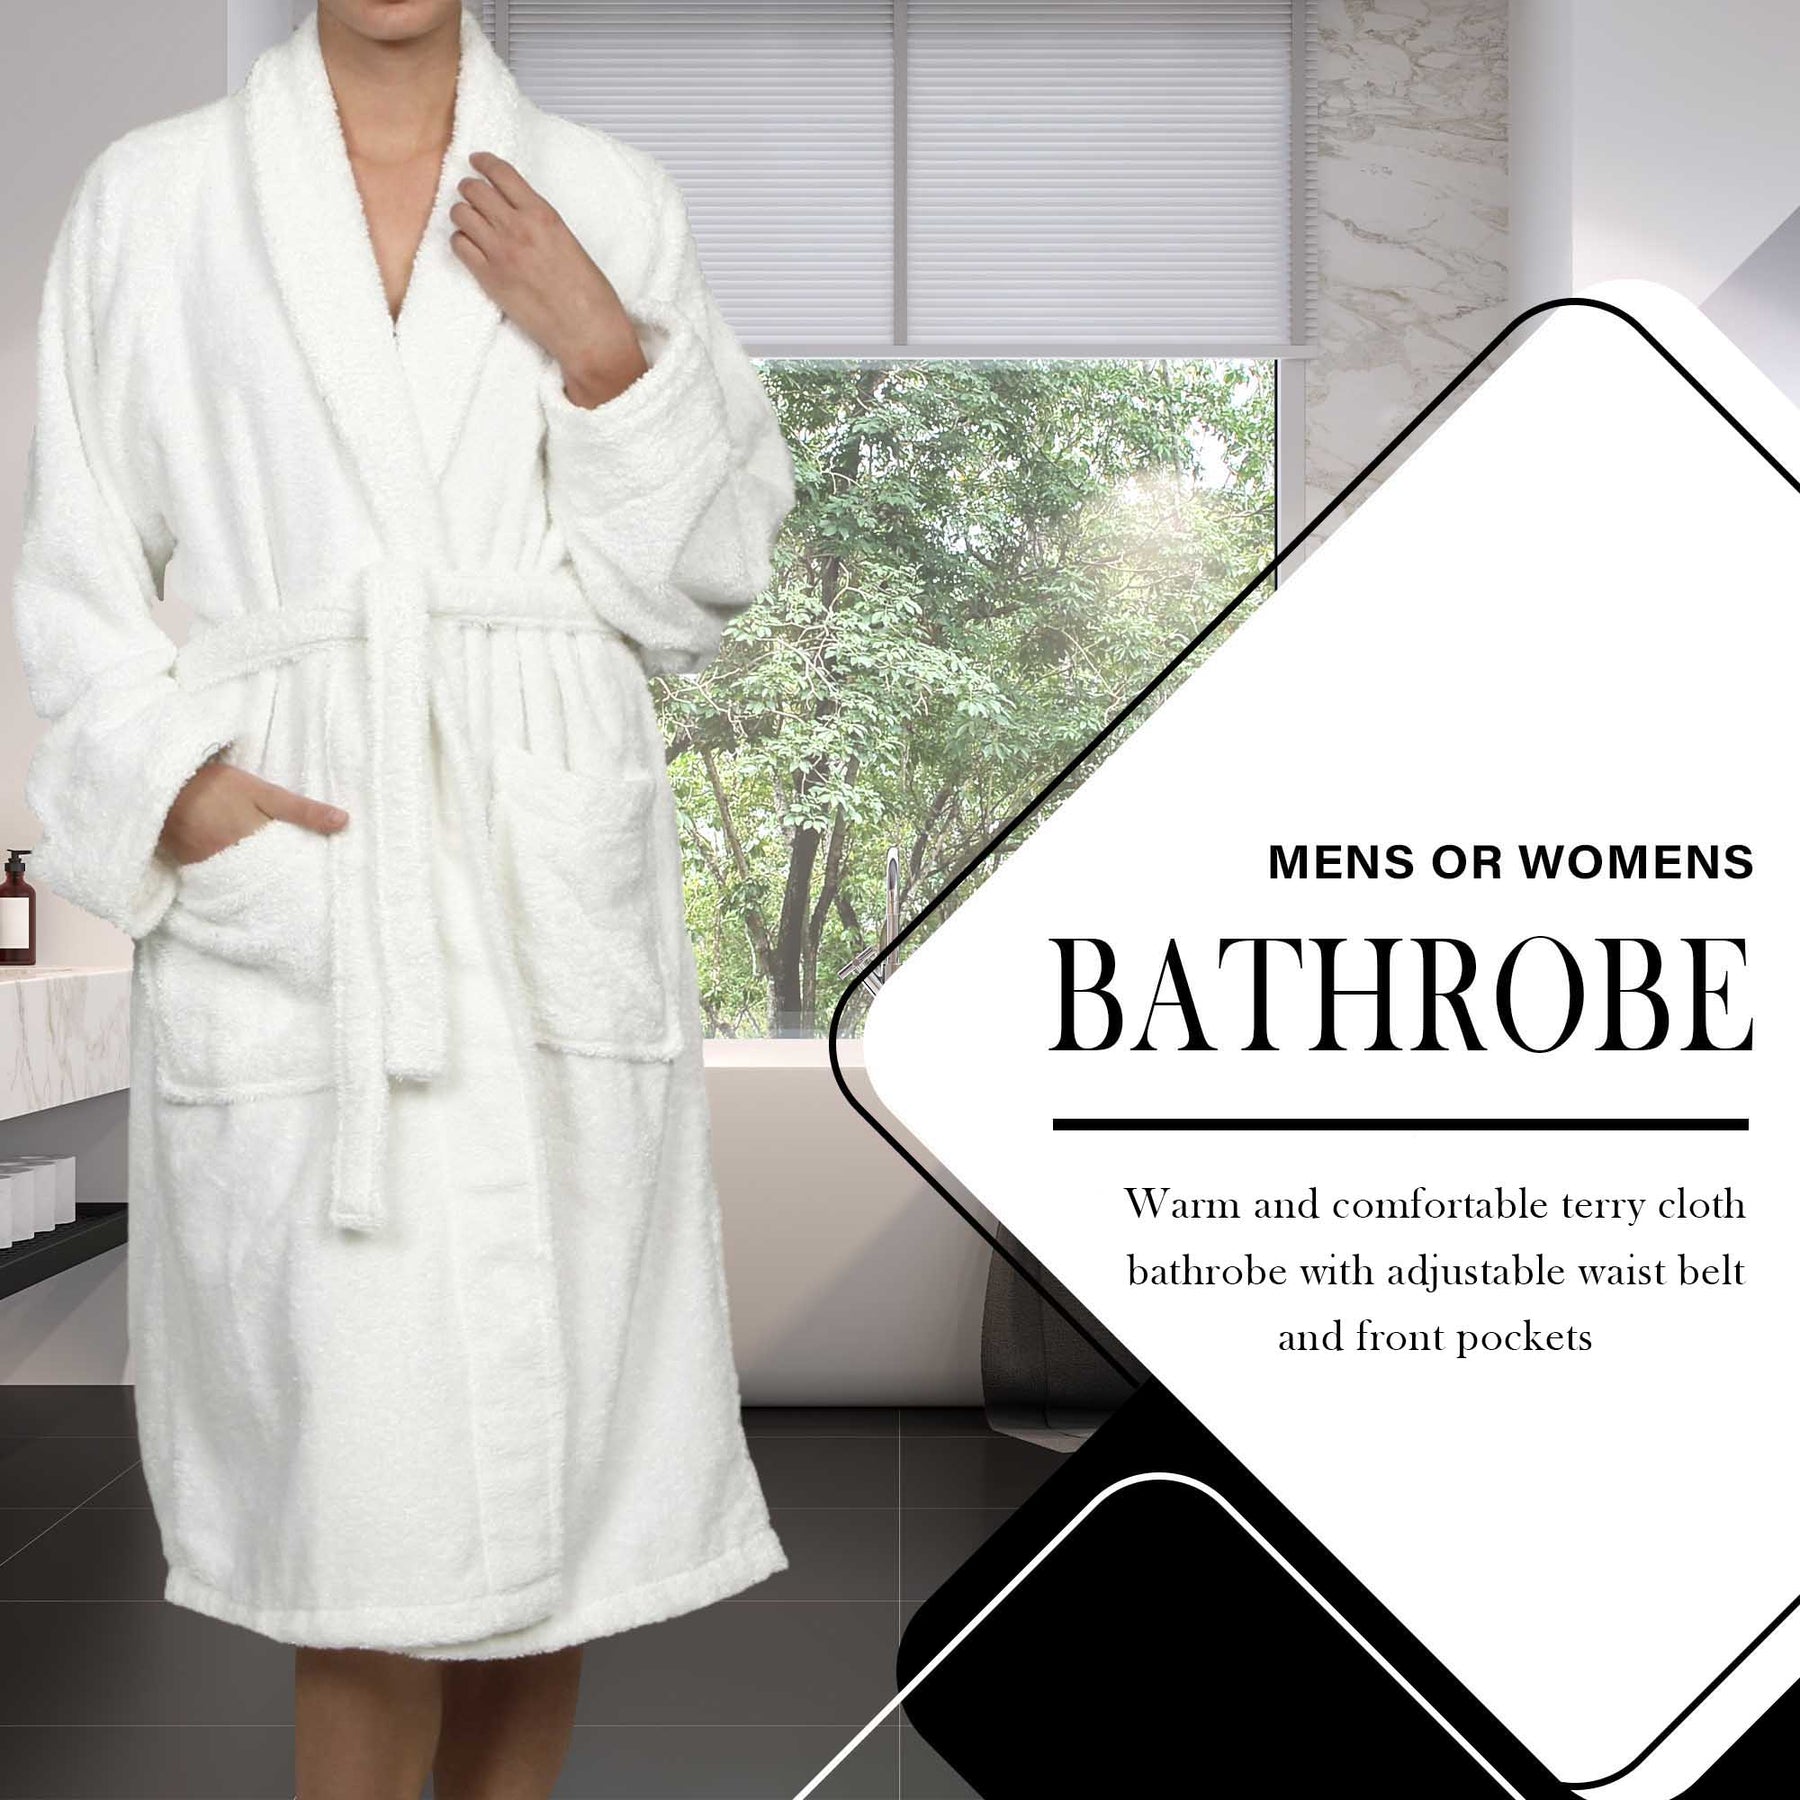 Cotton Ultra-Soft Terry Adult Unisex Lightweight Luxury Bathrobe - White